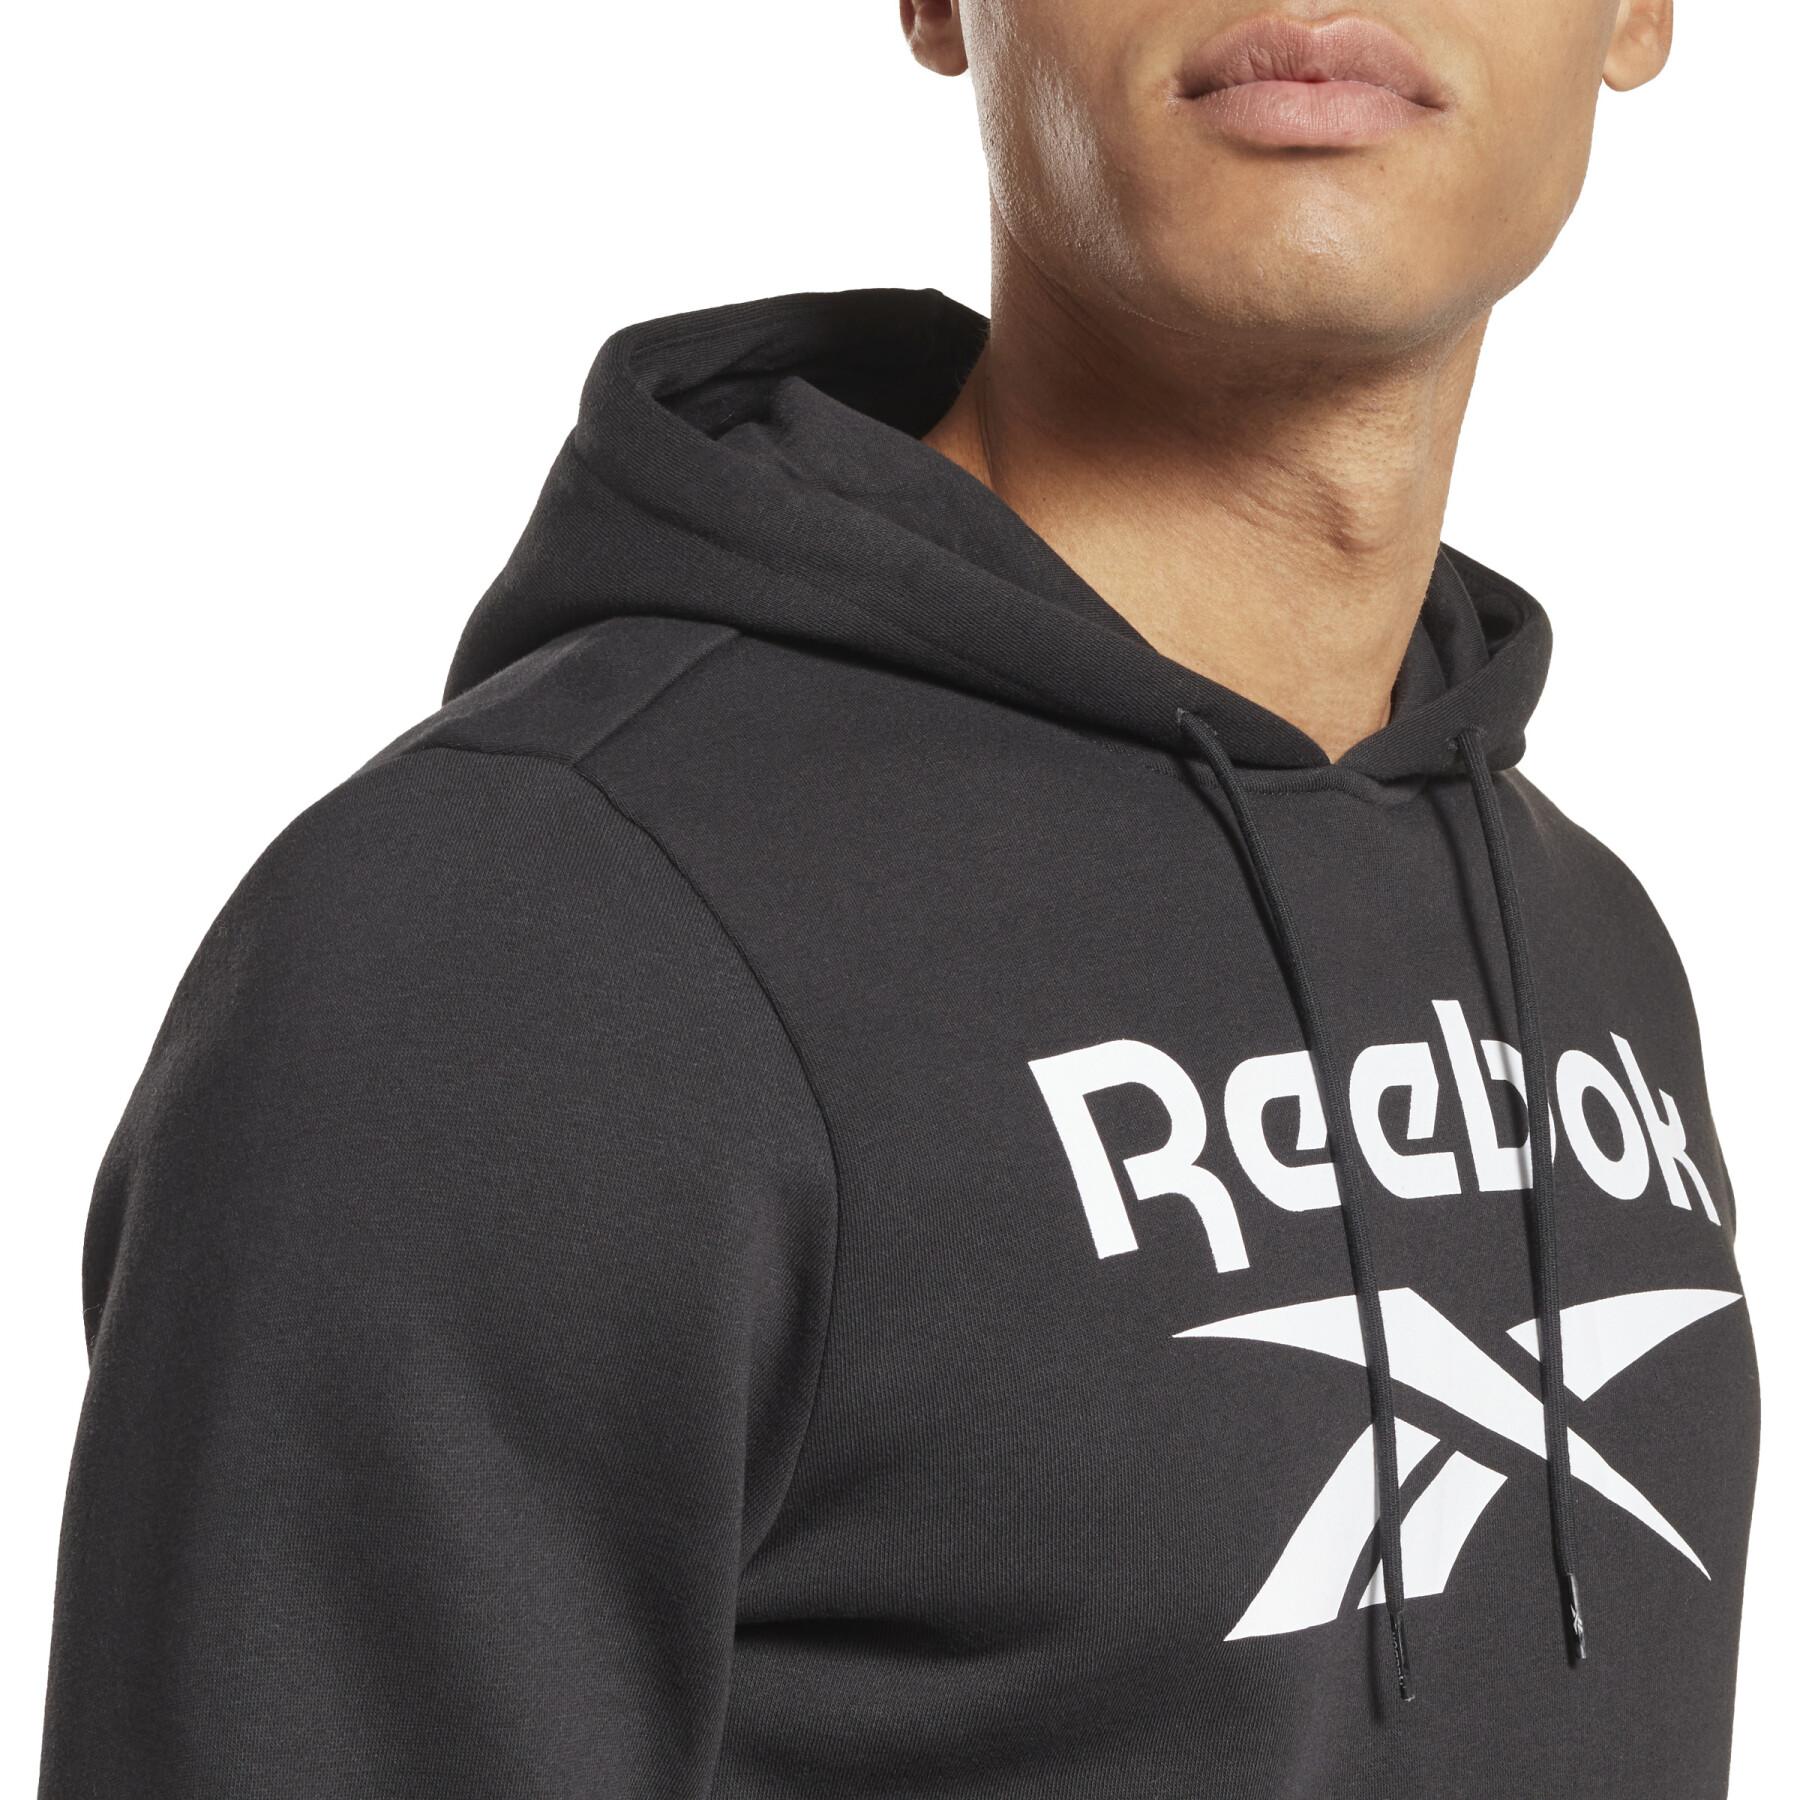 Sweatshirt à capuche molleton Reebok Identity Stacked Logo